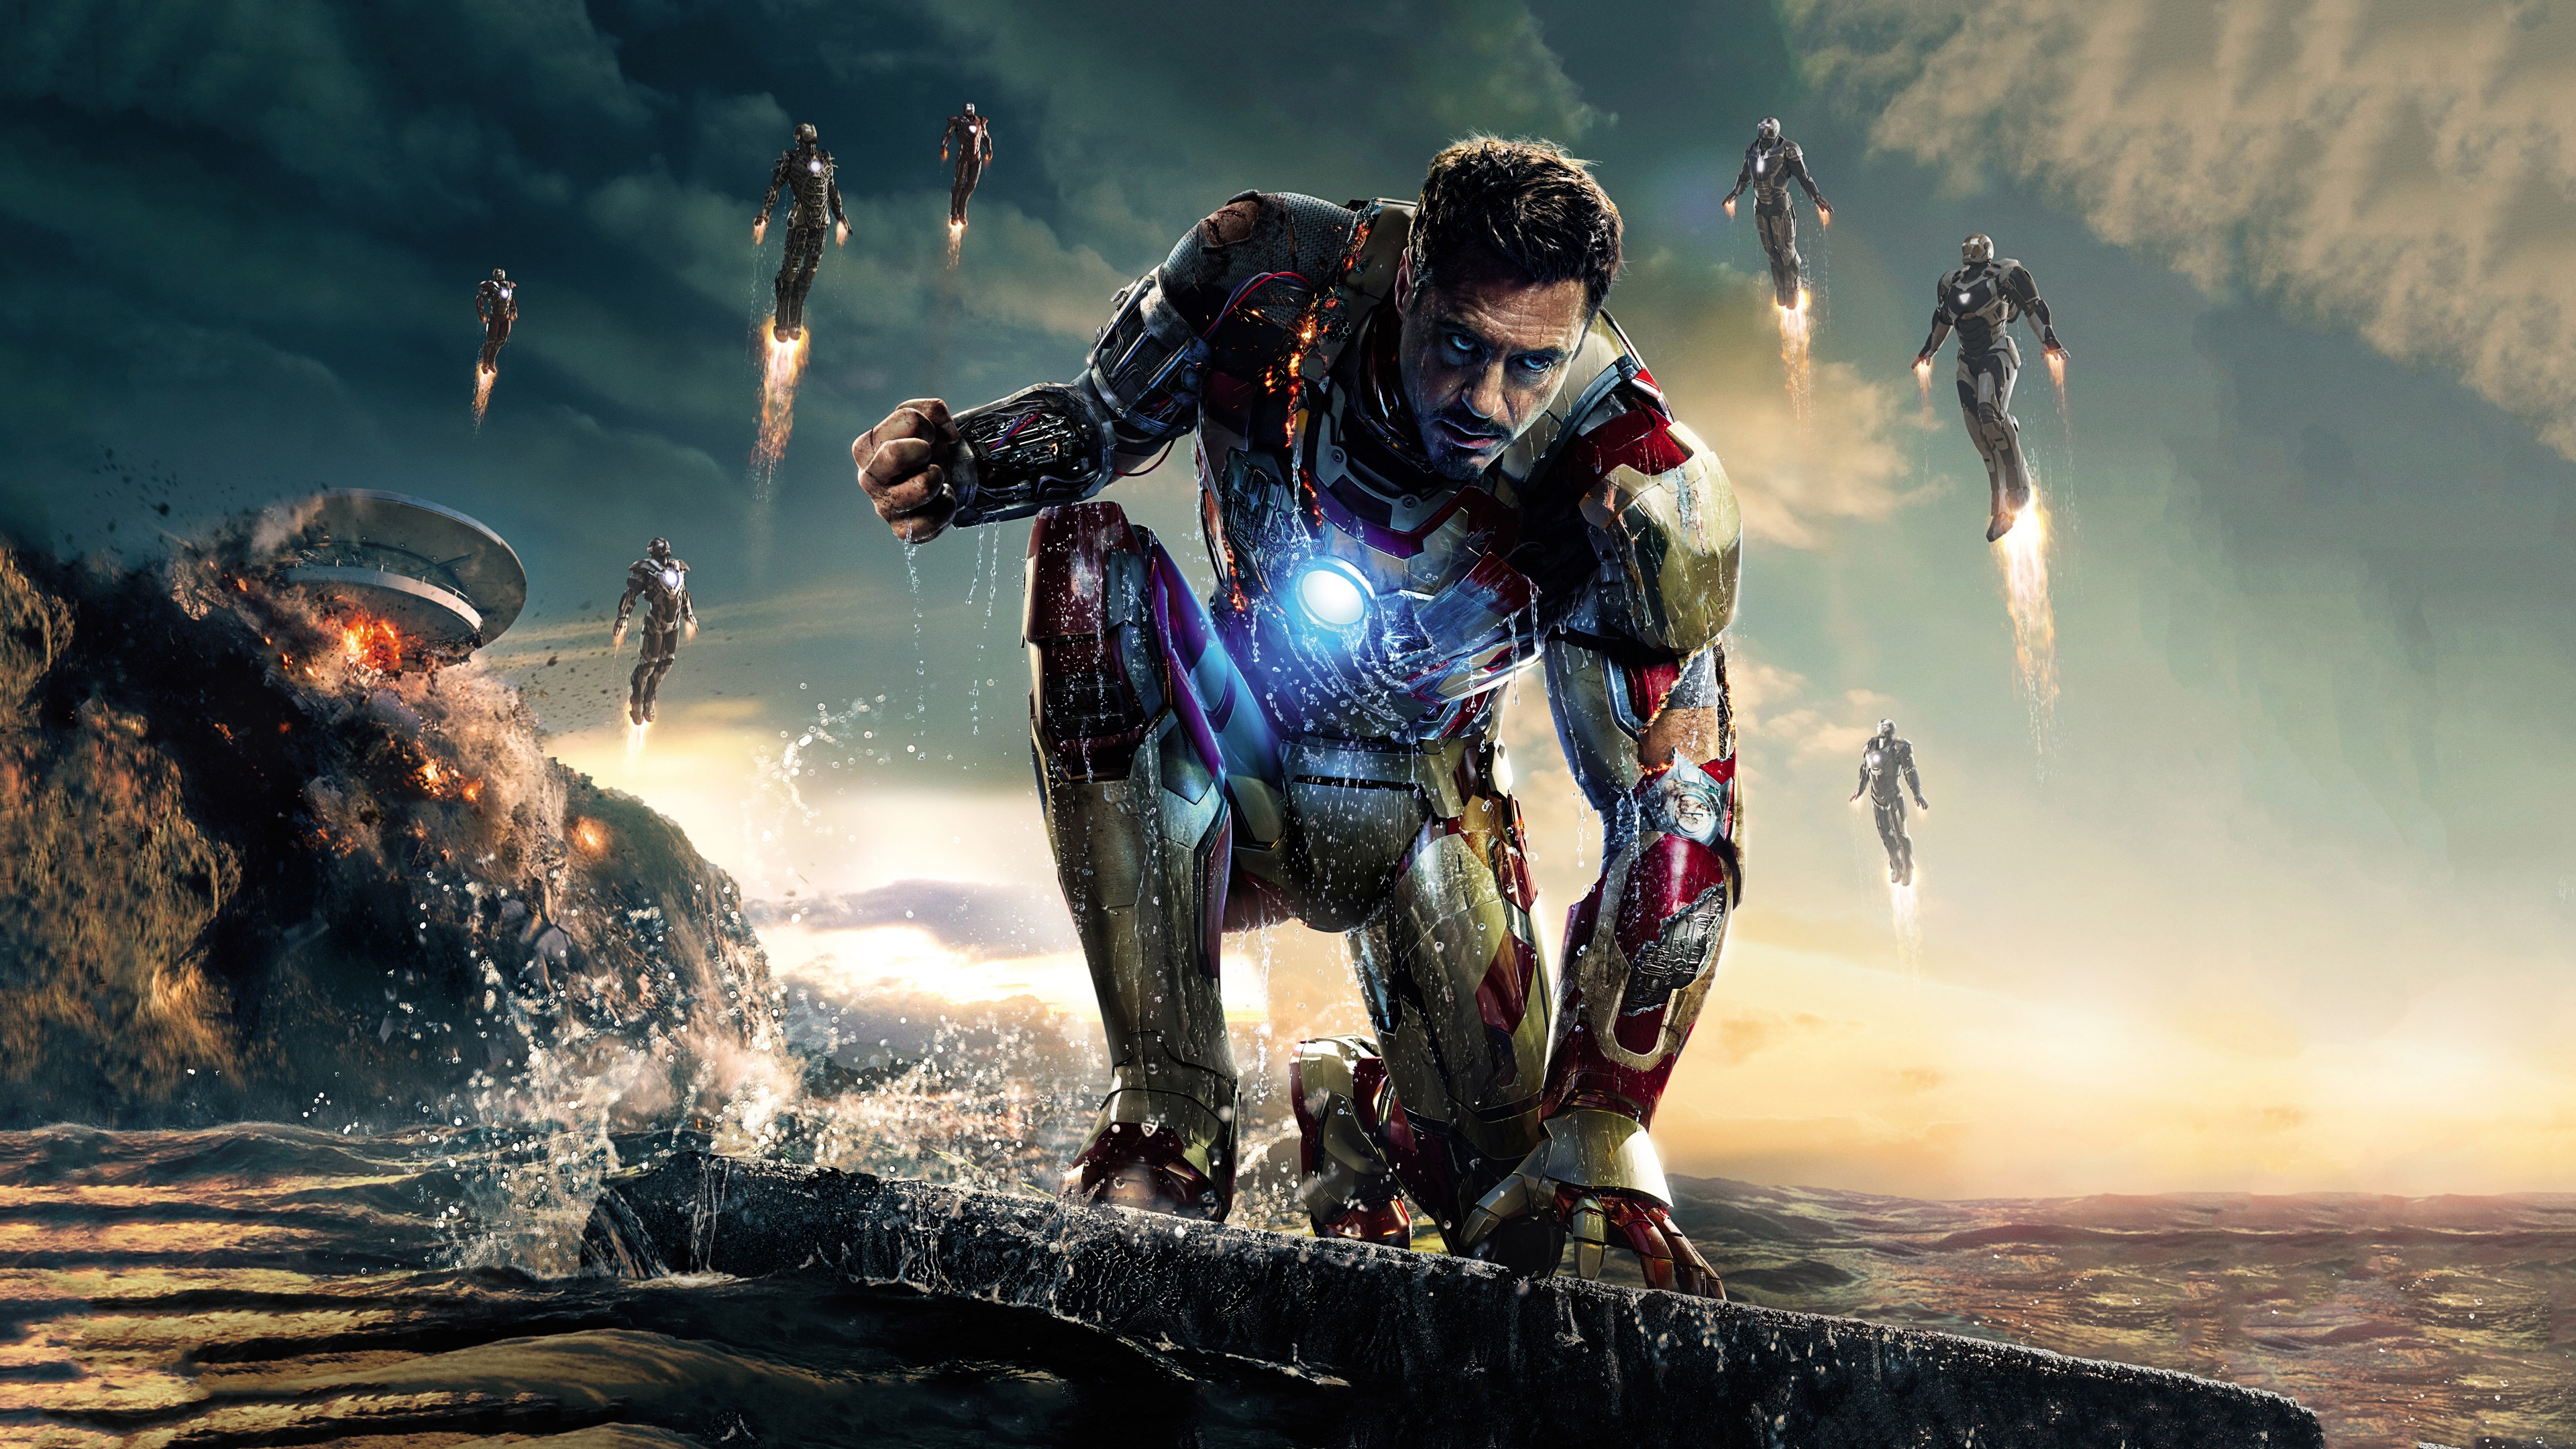 Wallpaper Avengers: Age of Ultron, Avengers 2, Robert Downey Jr., Iron Man,  Tony Stark, Poster, Movies #5750